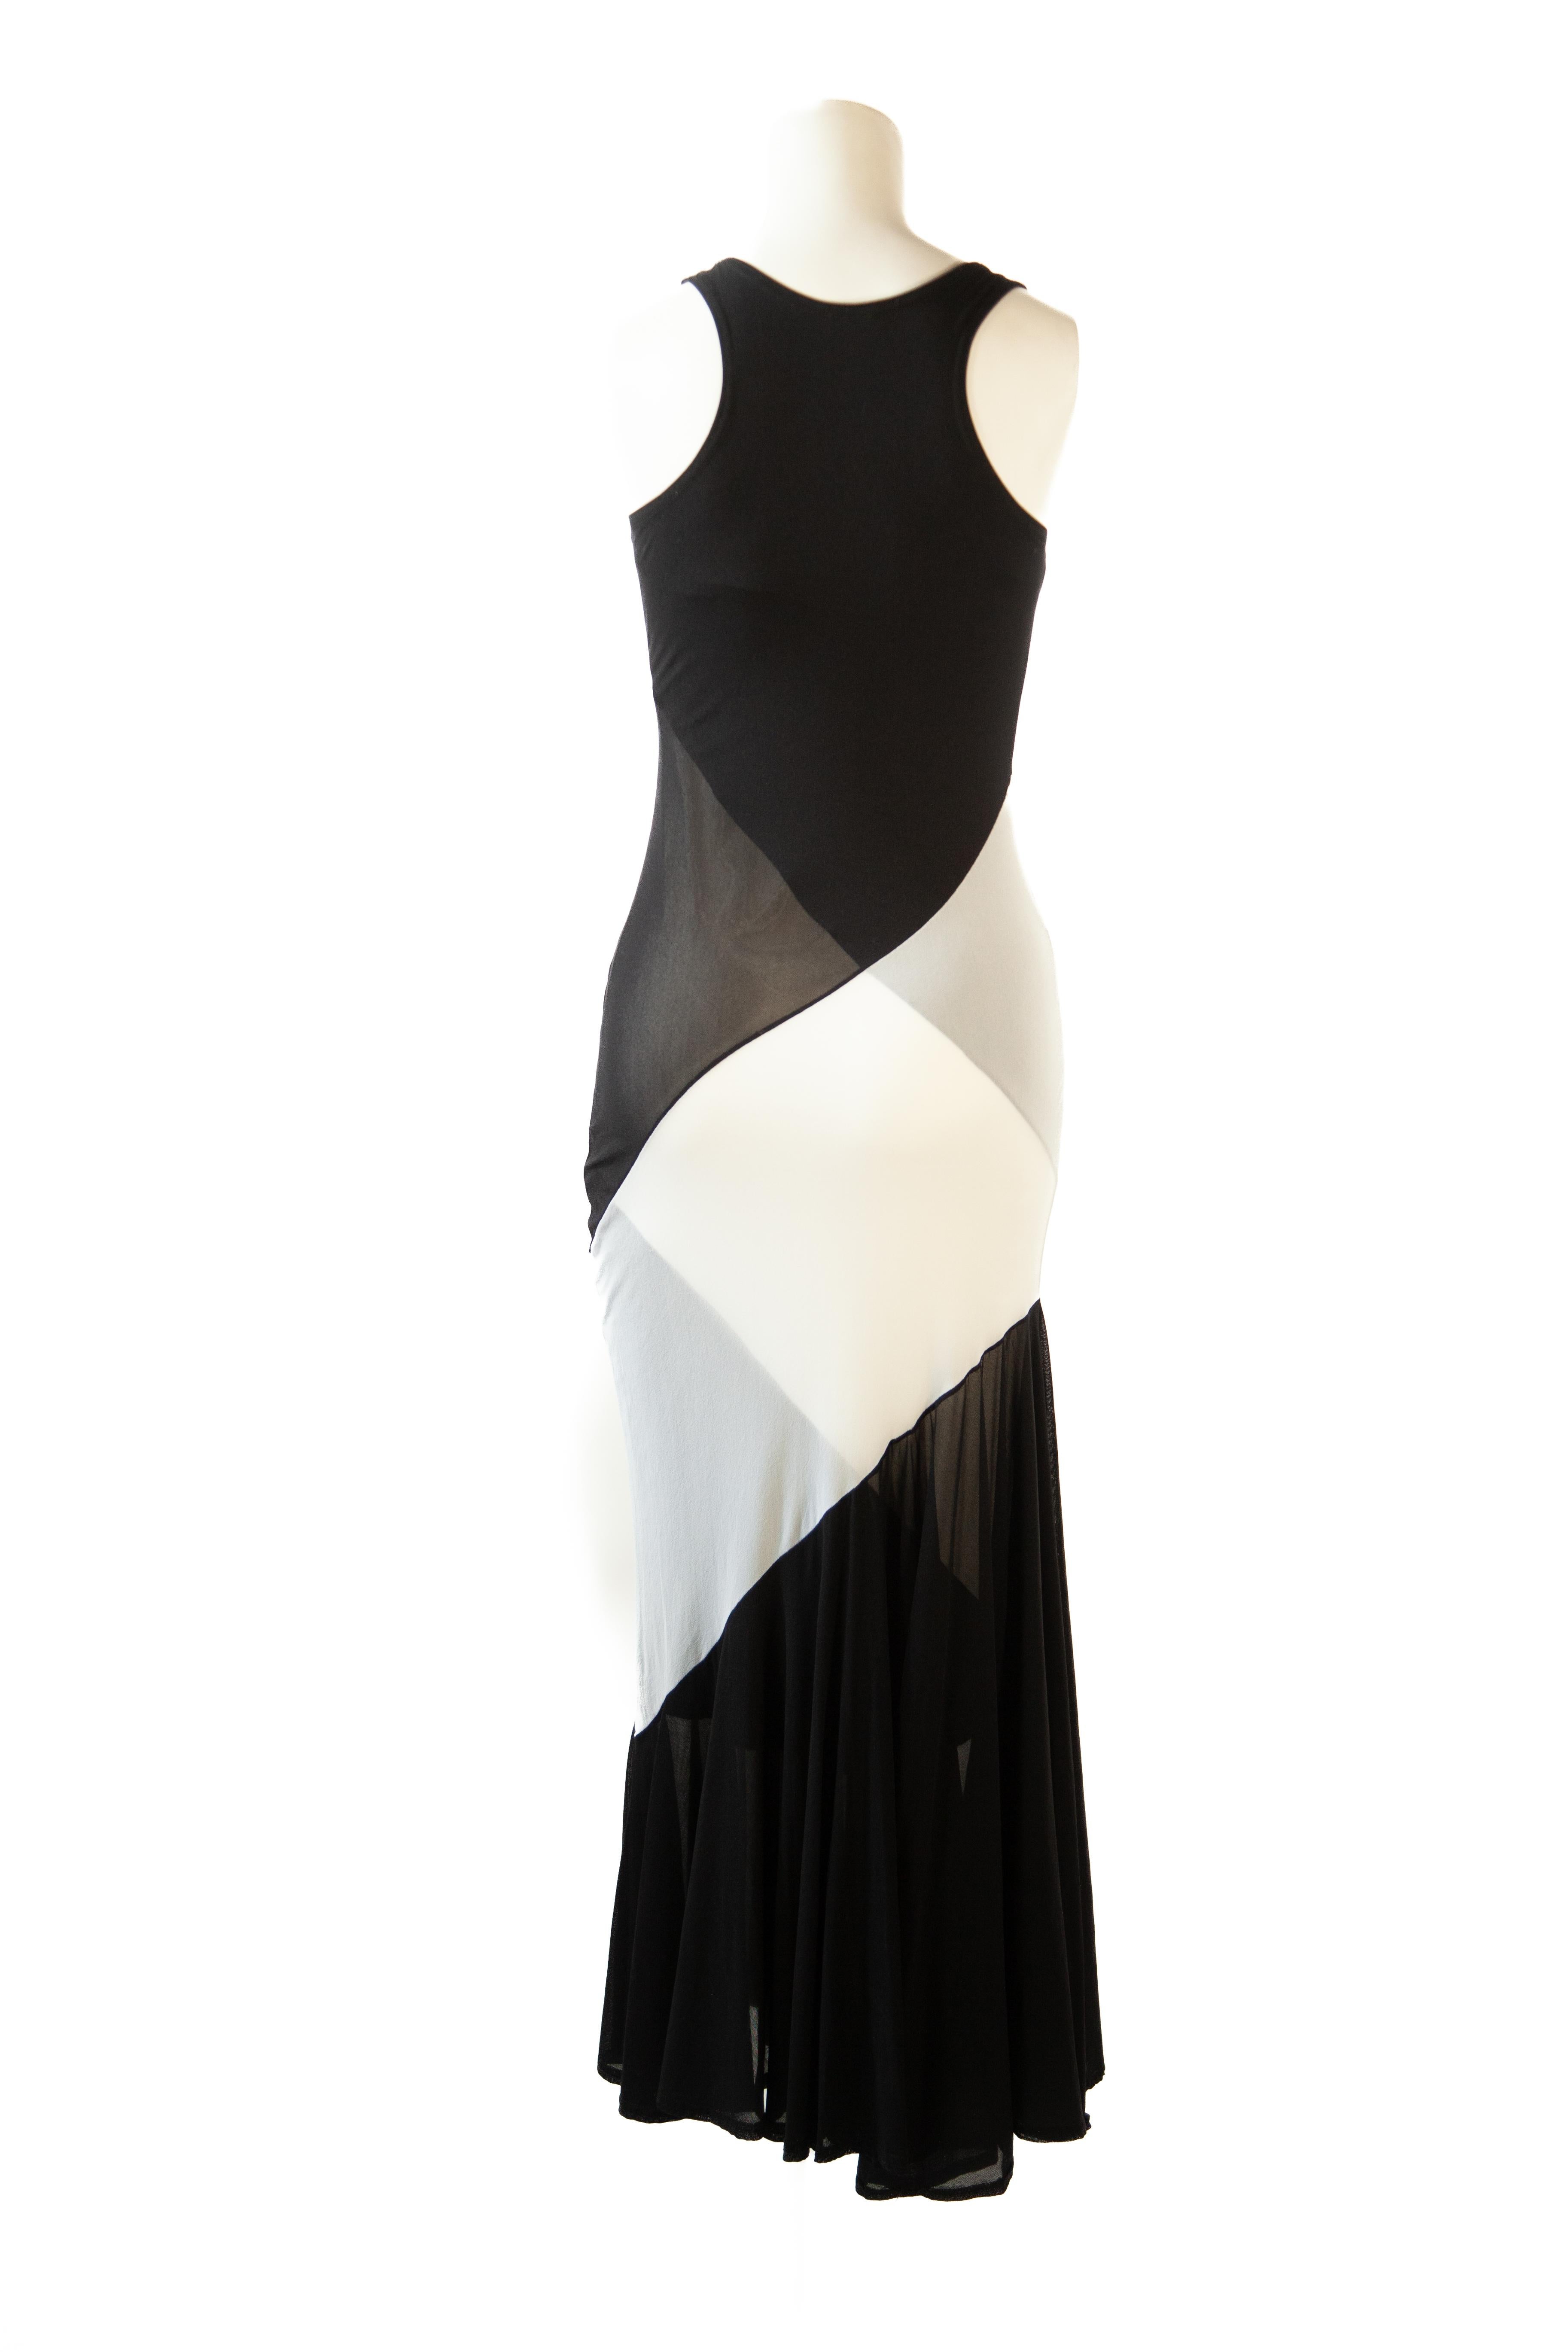 Armani Collezioni sleeveless black and white trangle stretch dress with ruffle hem